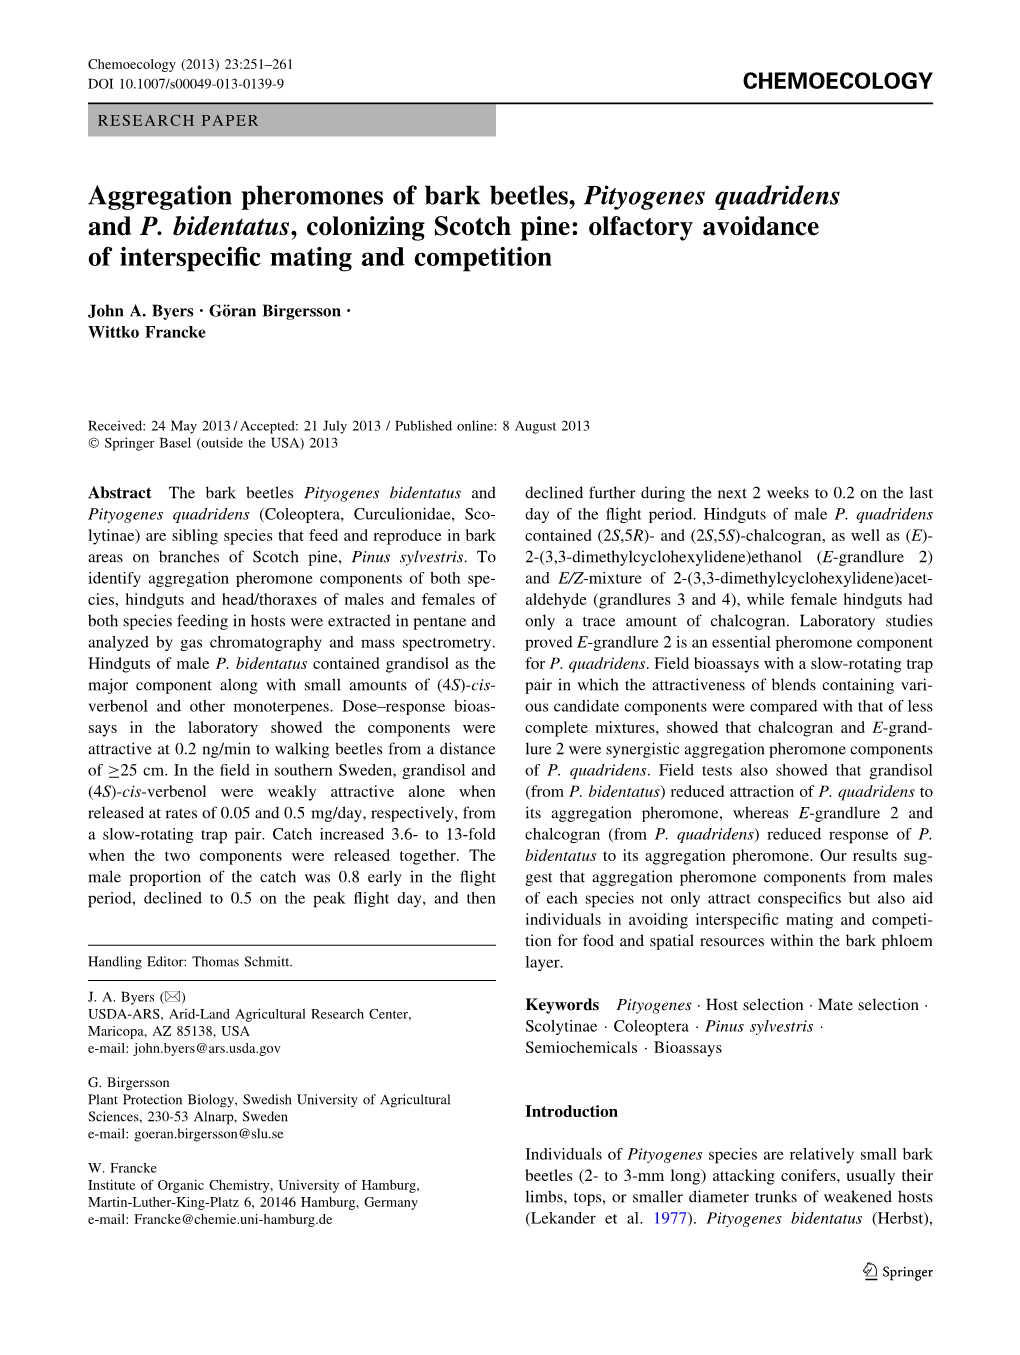 Aggregation Pheromones of Bark Beetles, Pityogenes Quadridens and P